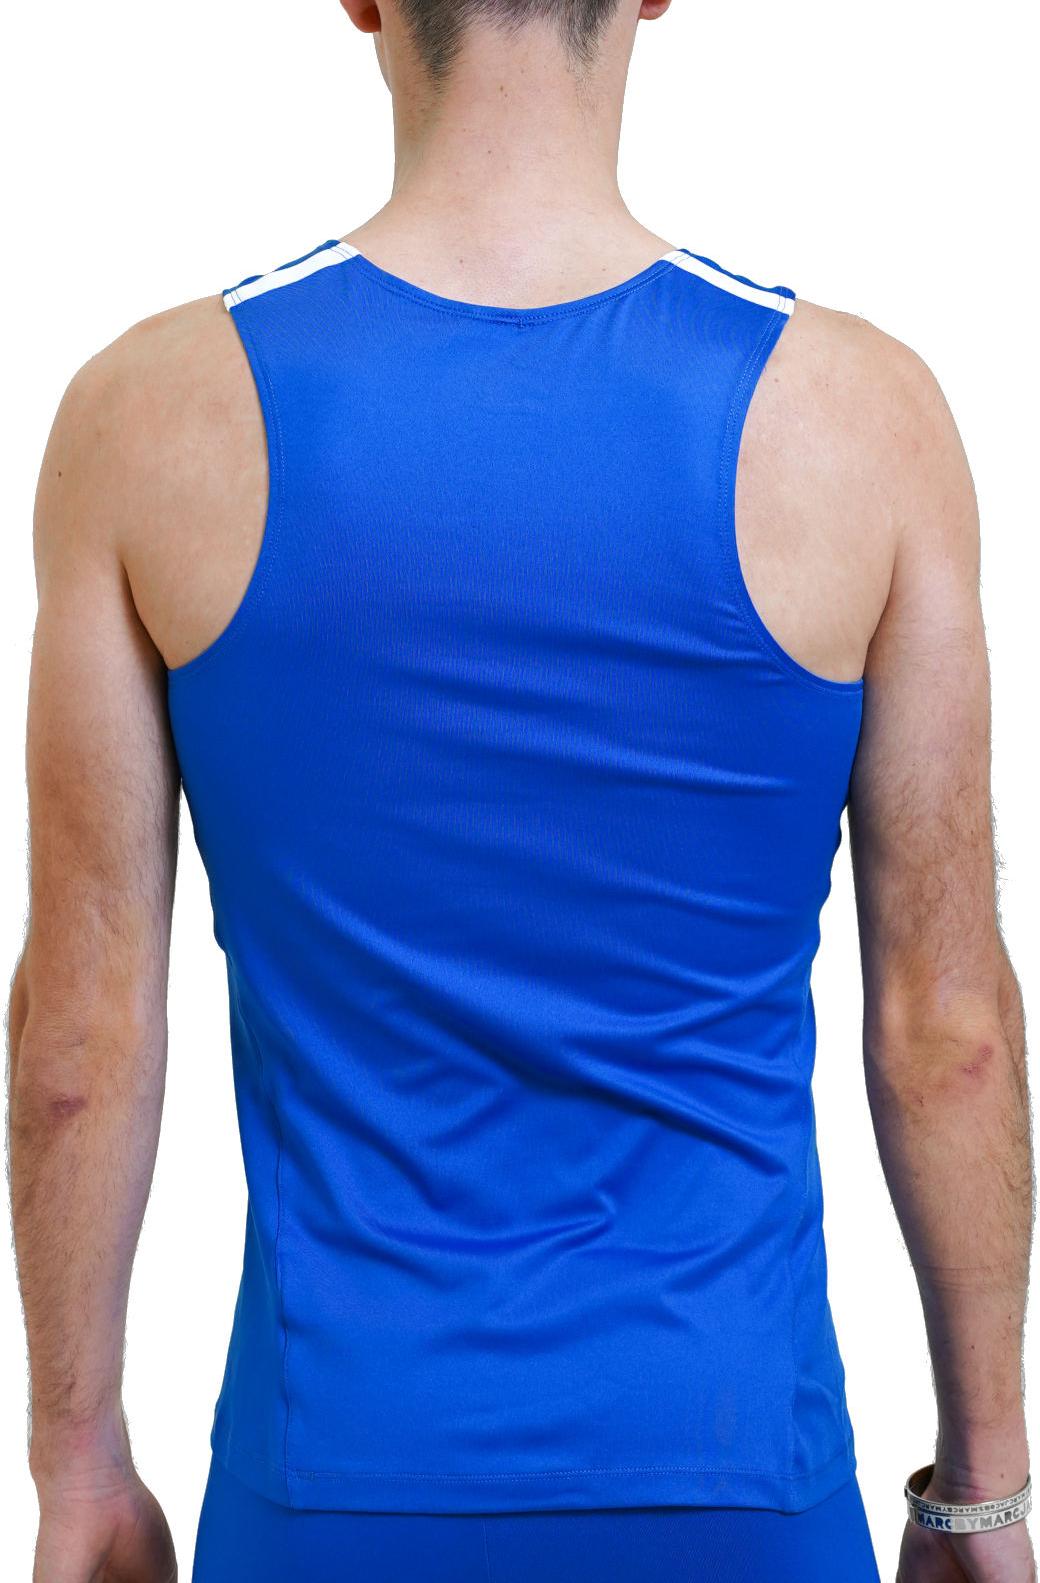 Débardeur Nike Muscle Stock pour Homme - NT0306-463 - Bleu Royal